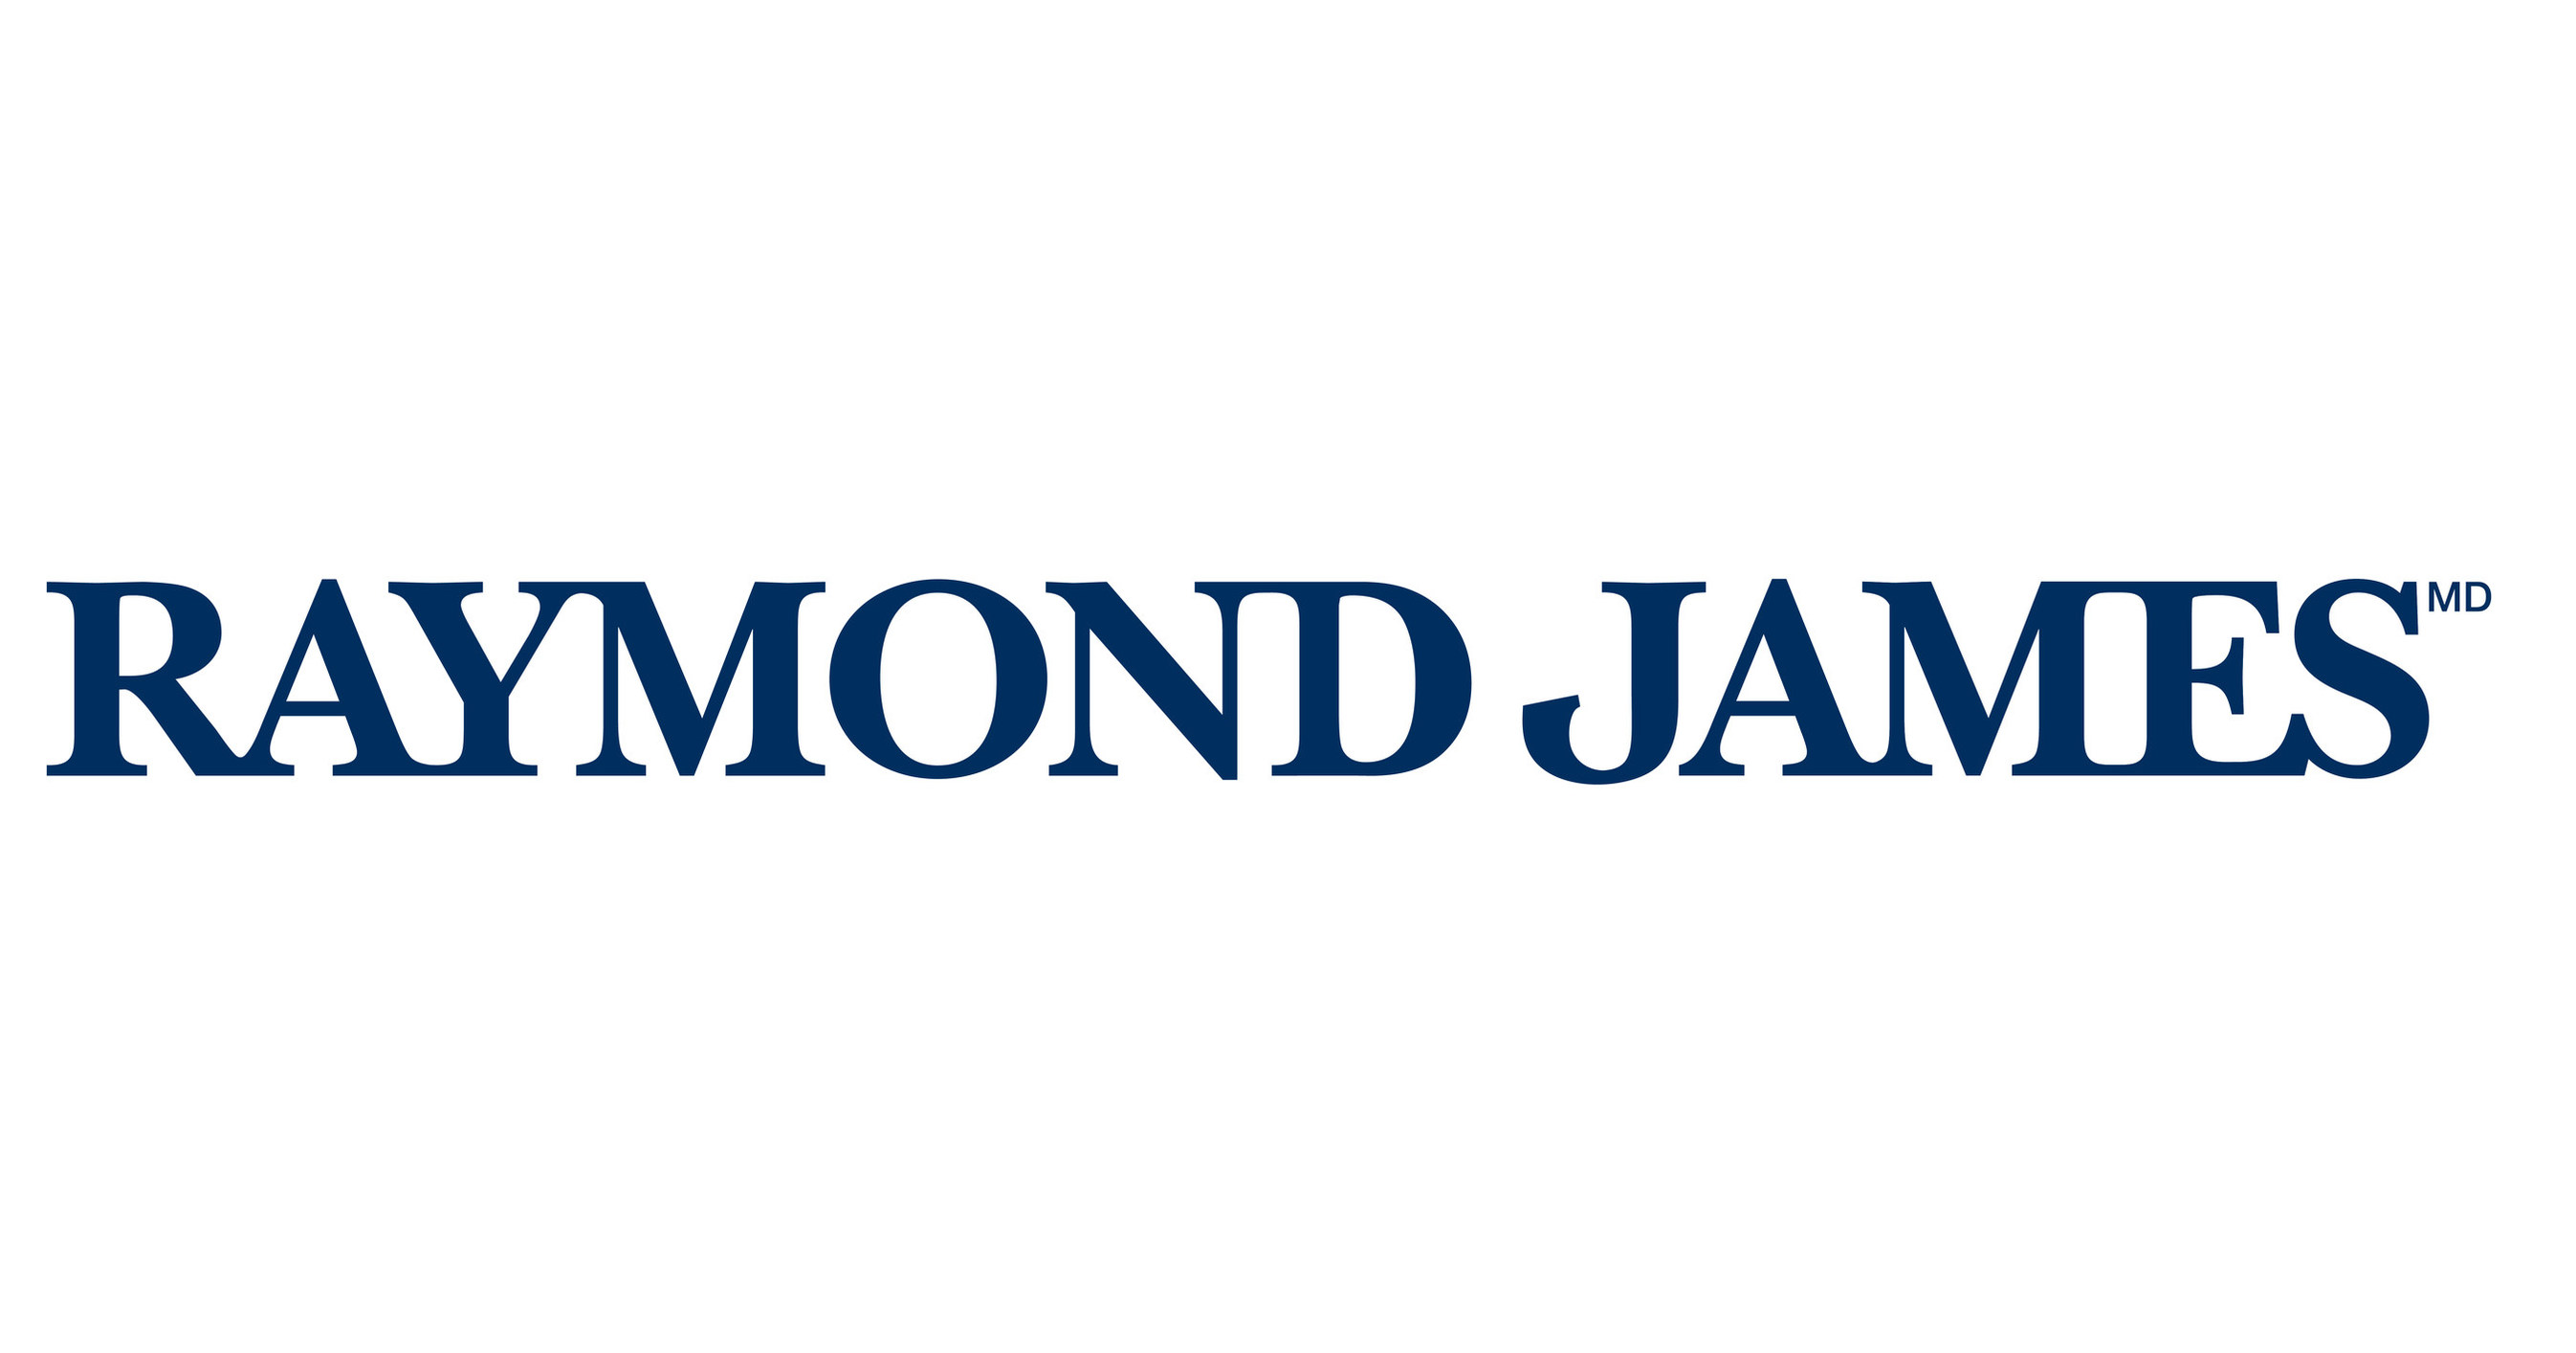 Raymond james financial stock wbponline forex